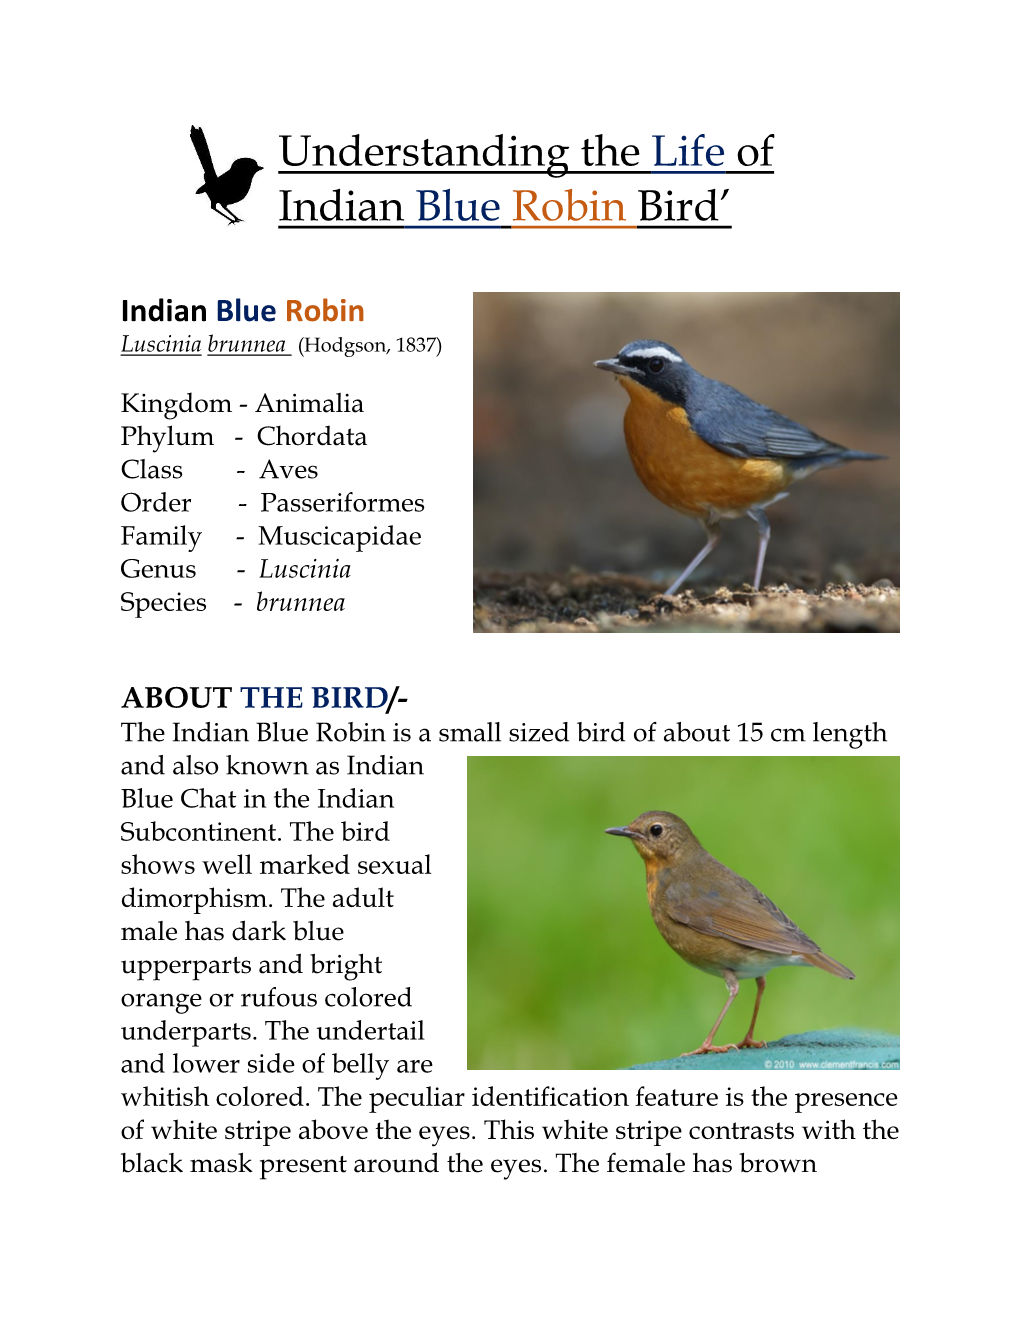 Understanding the Life of Indian Blue Robin Bird'